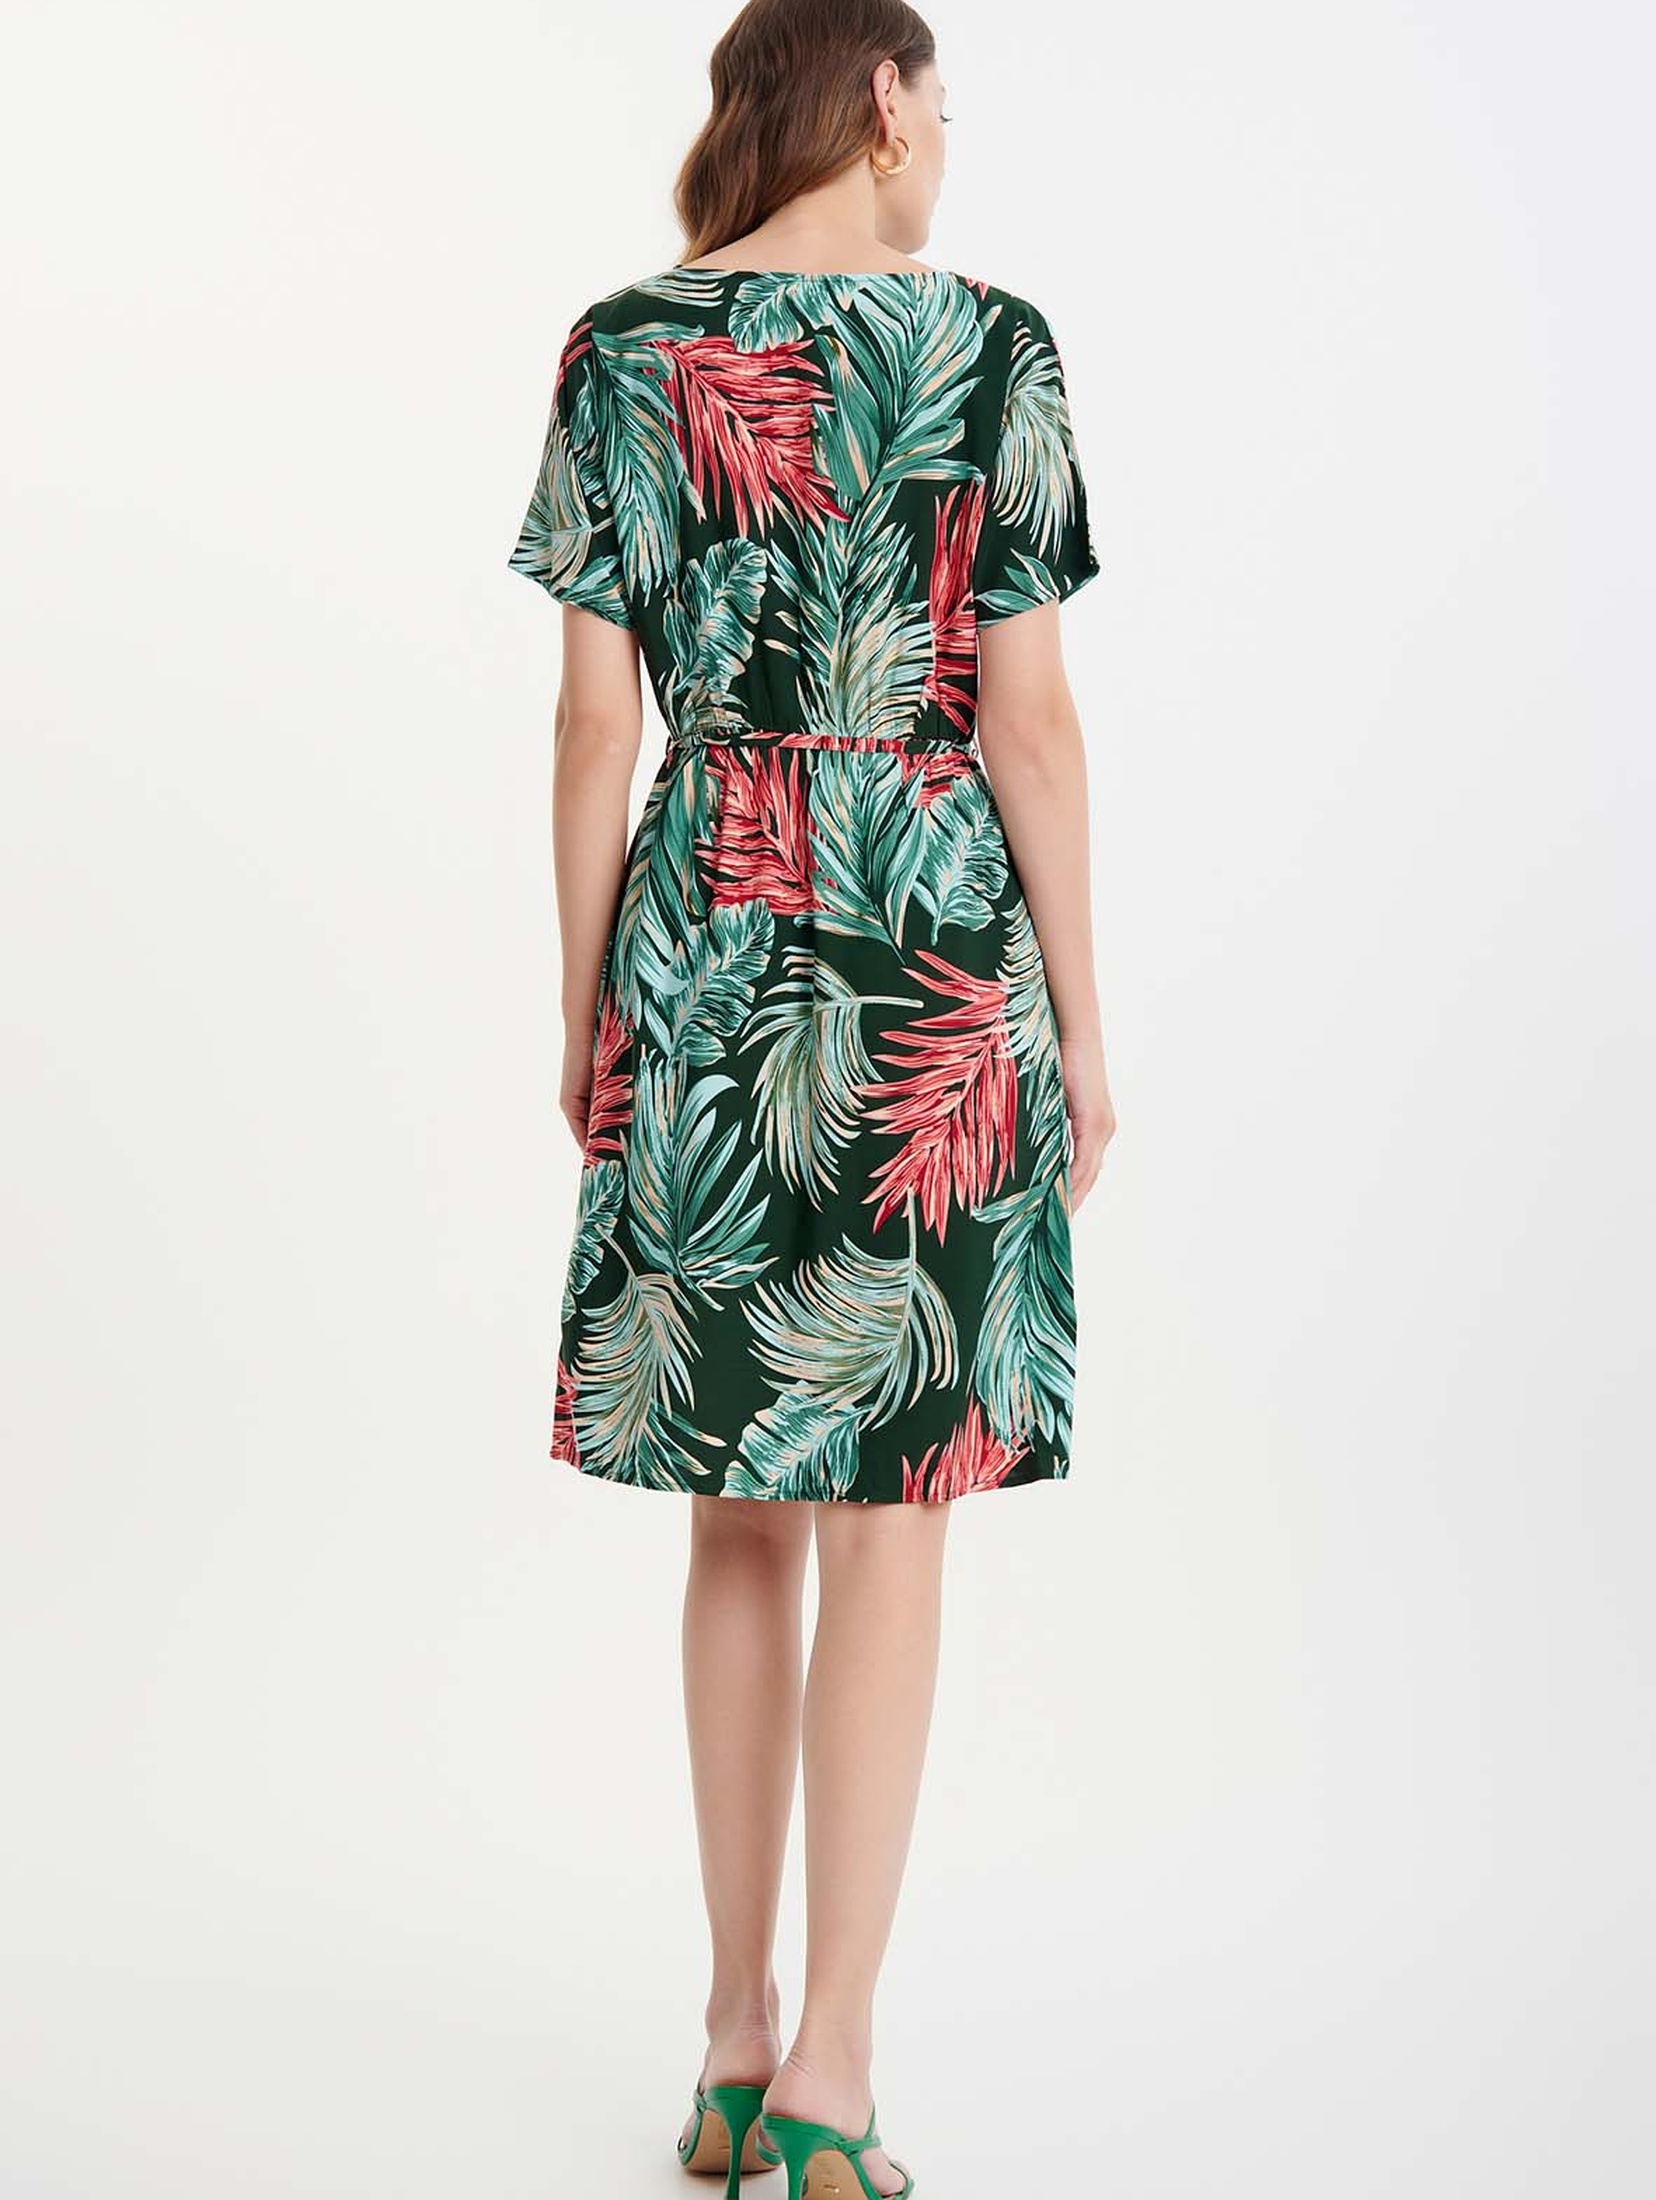 Damska sukienka krótka wielokolorowa z nadrukiem tropic